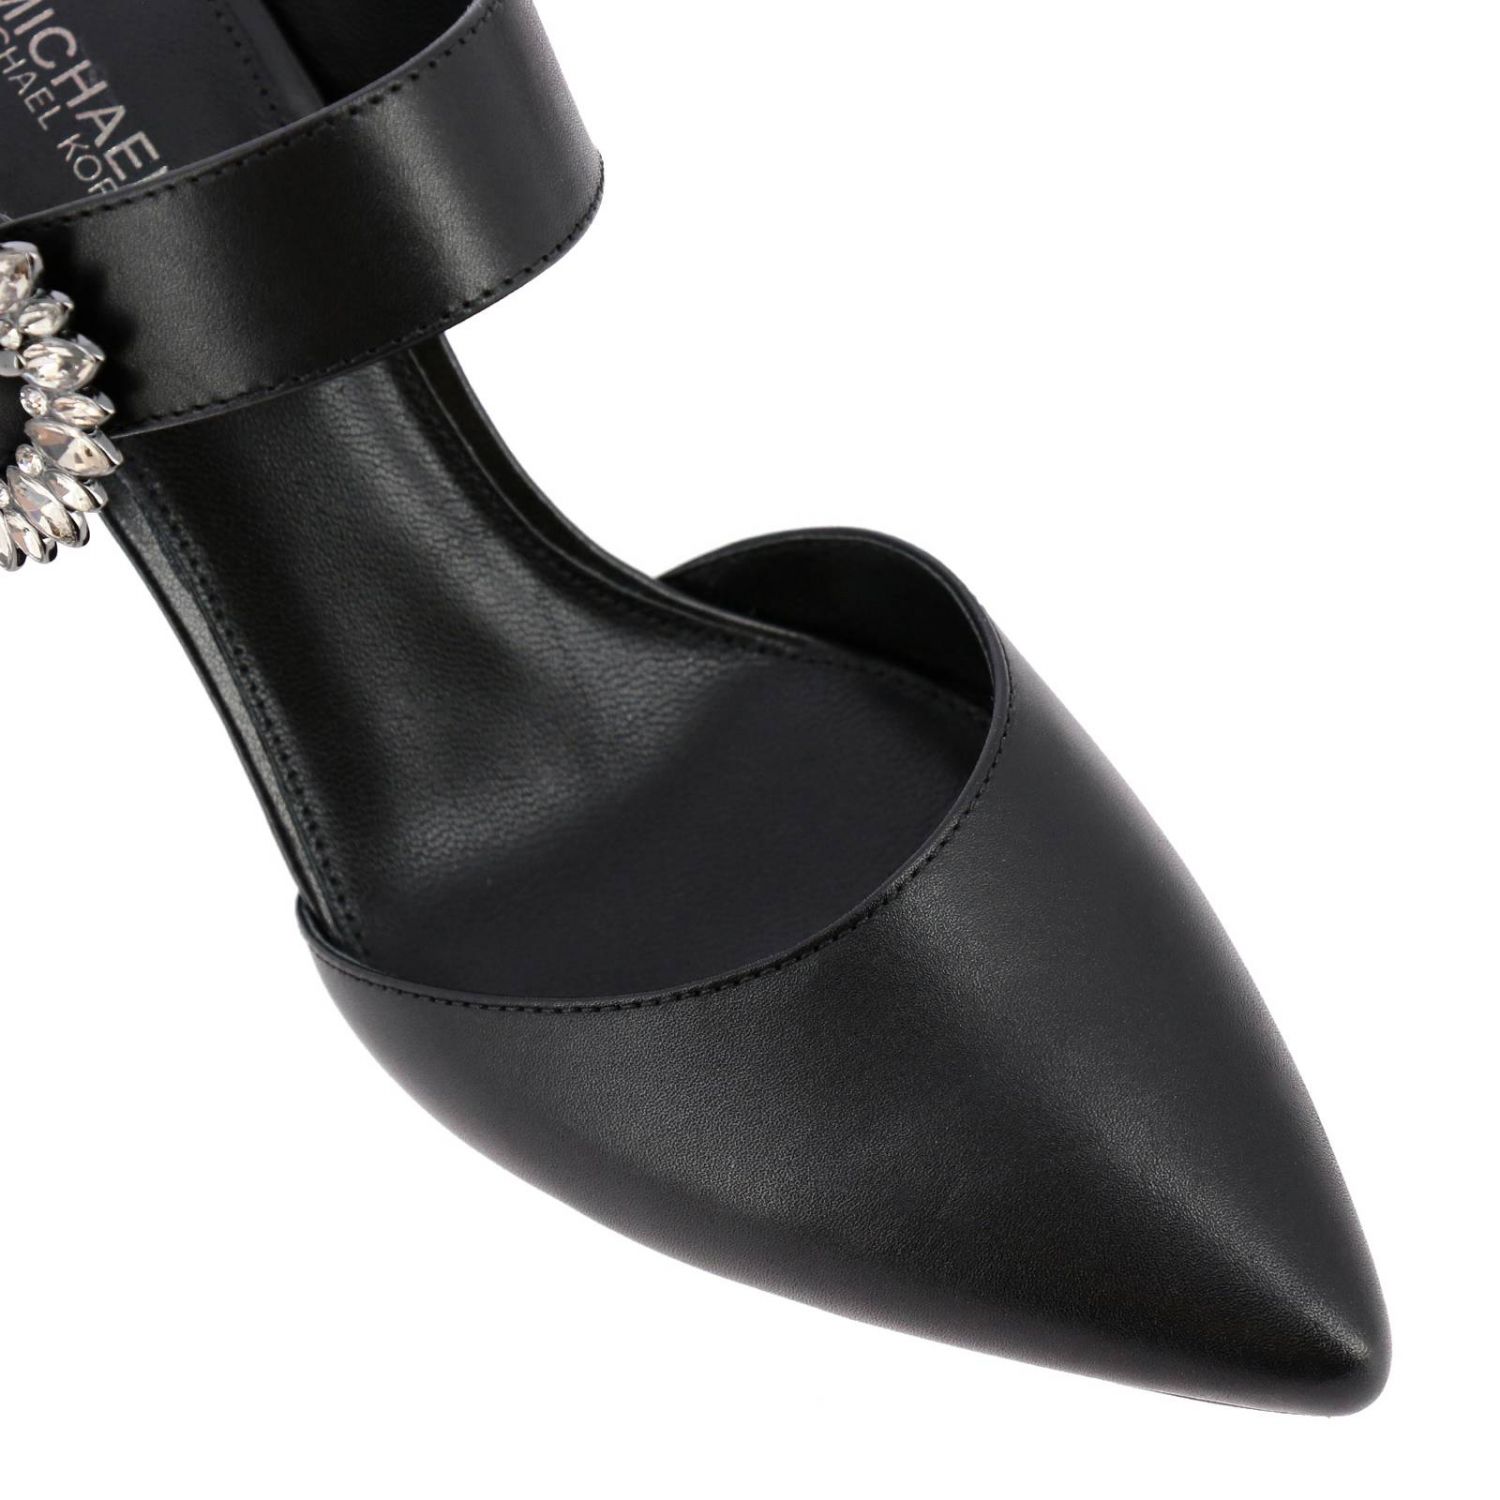 Michael Michael Kors Outlet: Shoes women - Black | High Heel Shoes ...